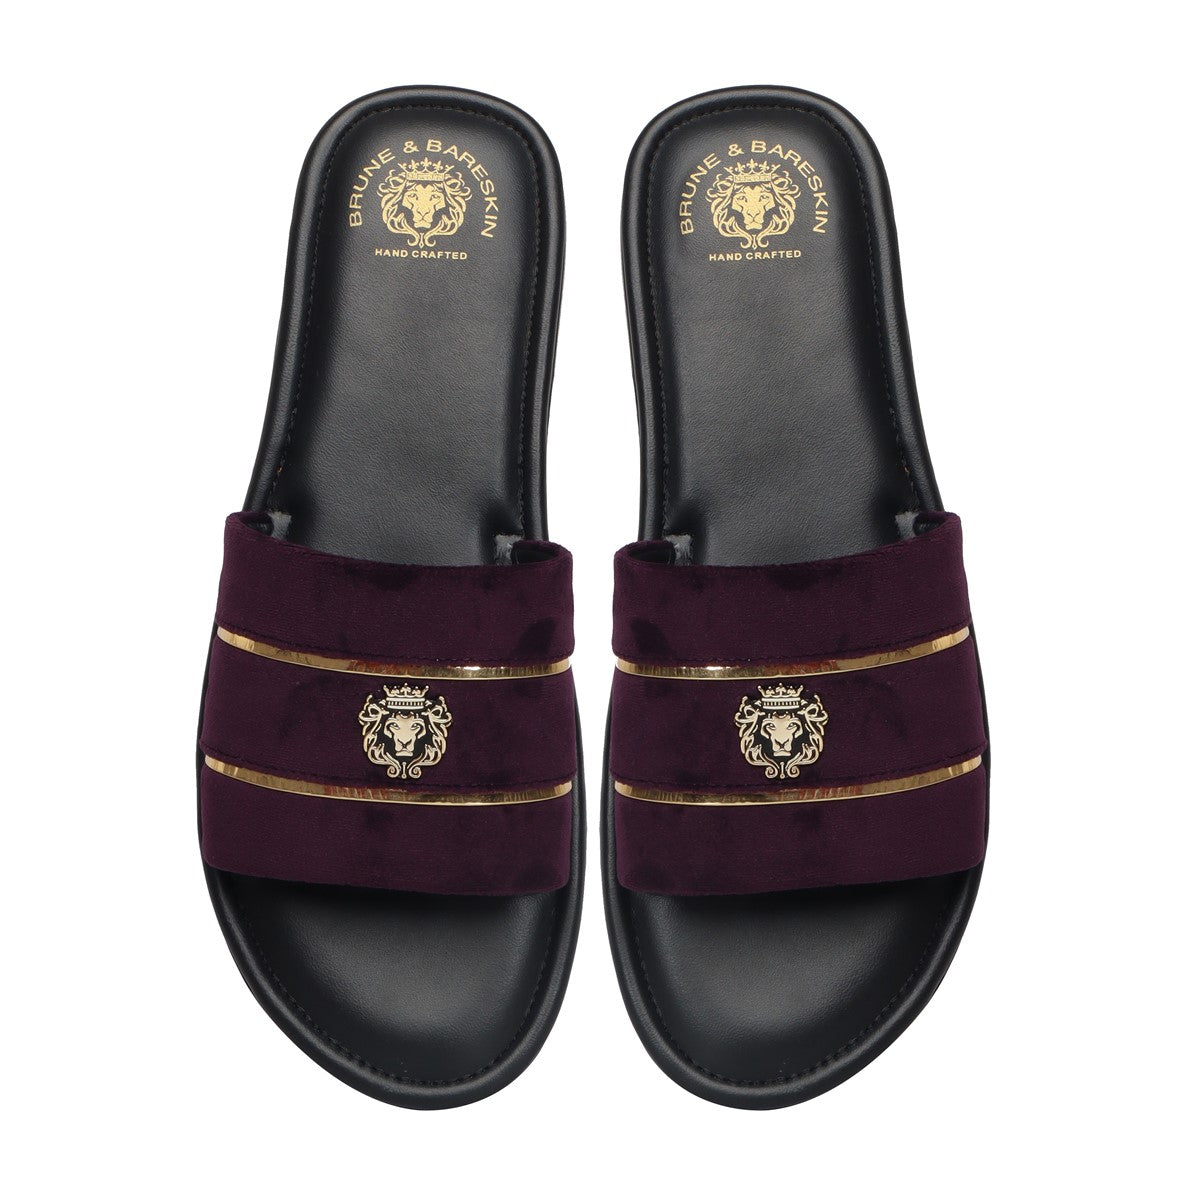 Versace | Shoes | Metallic Fuchsia Sandal Heels | Poshmark